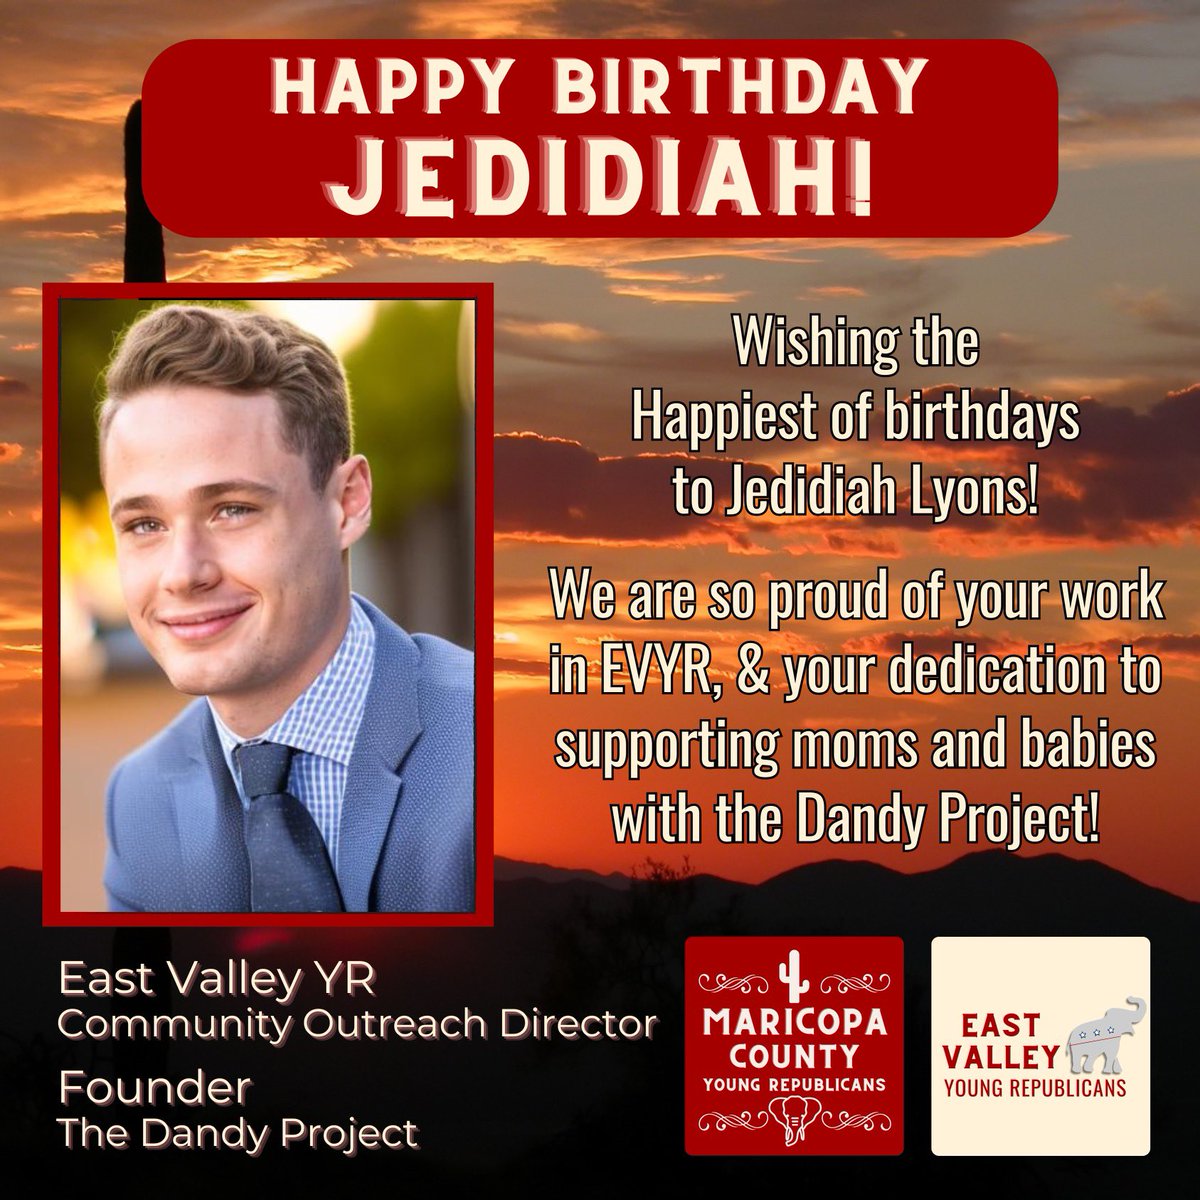 Happy birthday, Jed! 🎉